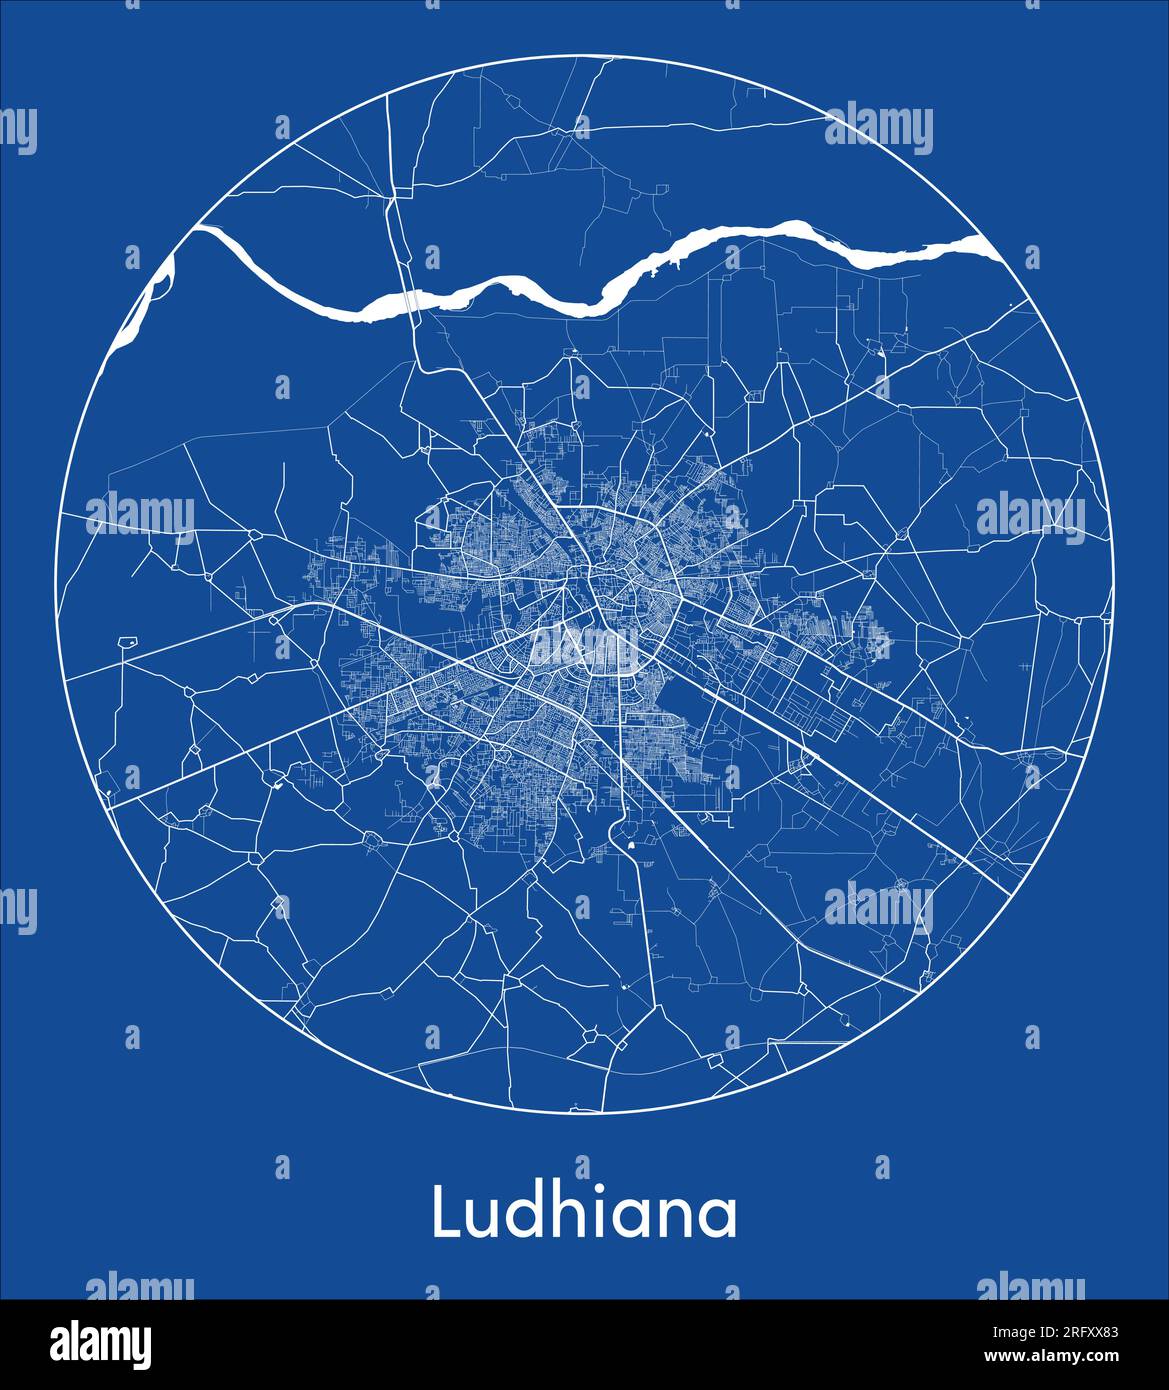 City Map Ludhiana India Asia blue print round Circle vector illustration Stock Vector